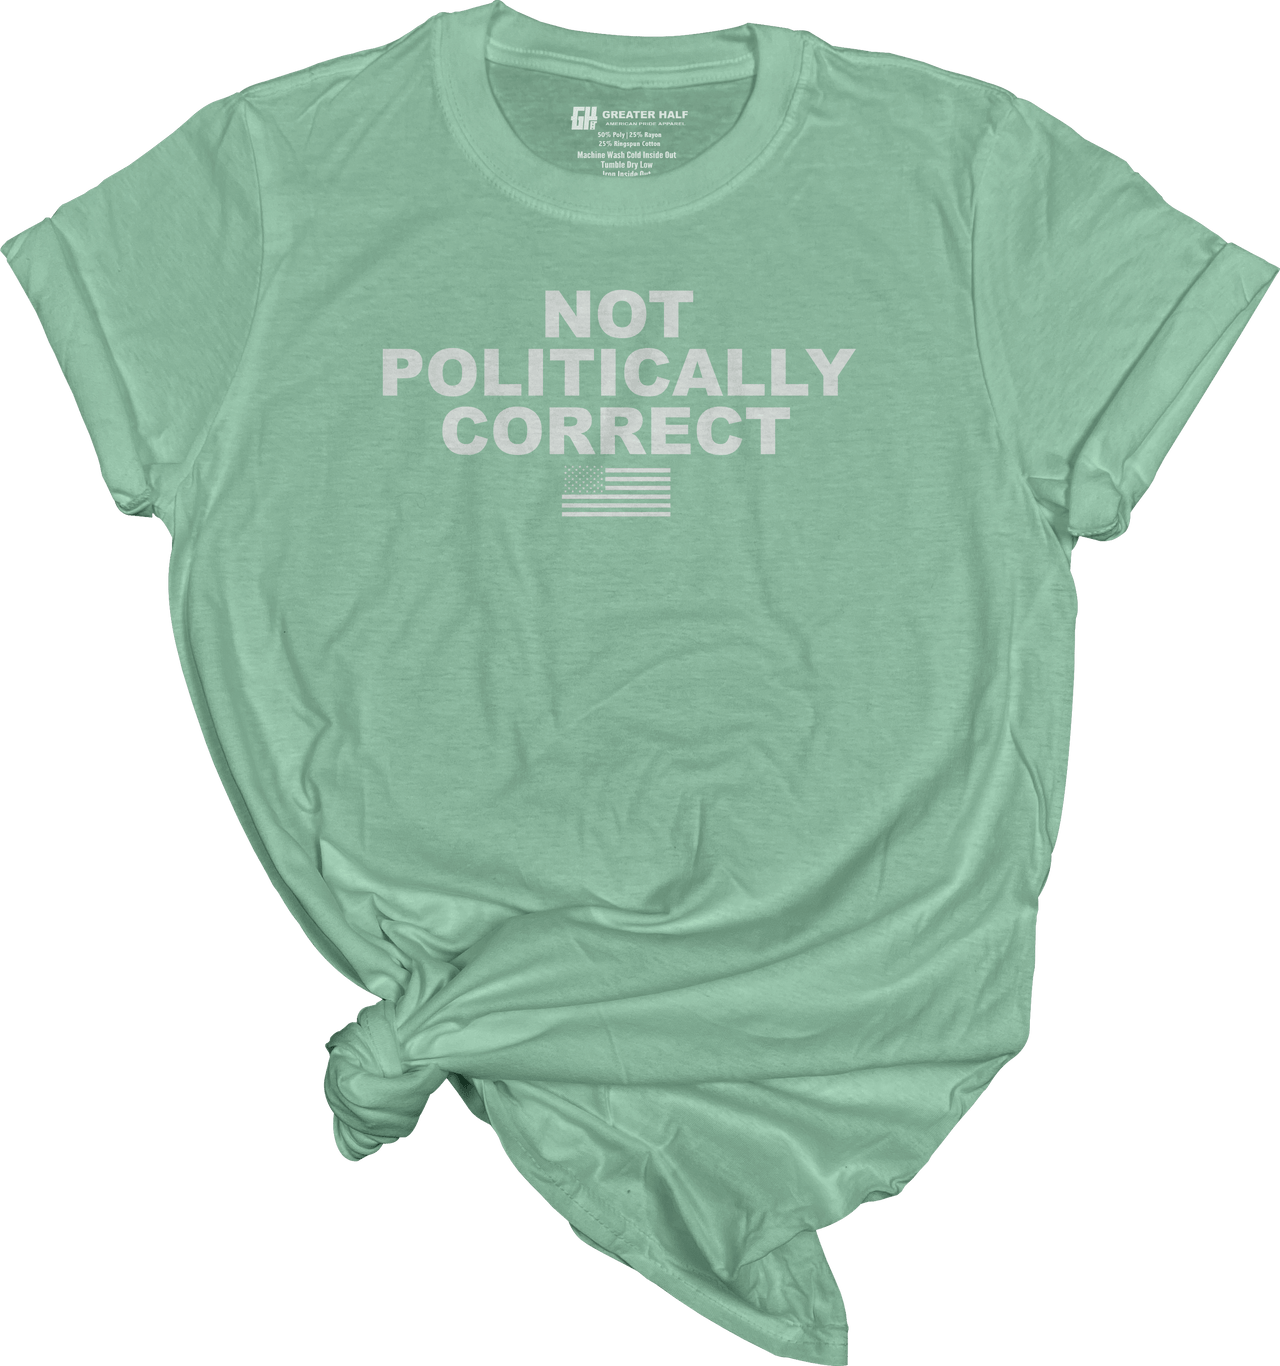 Not Politically Correct - Greater Half